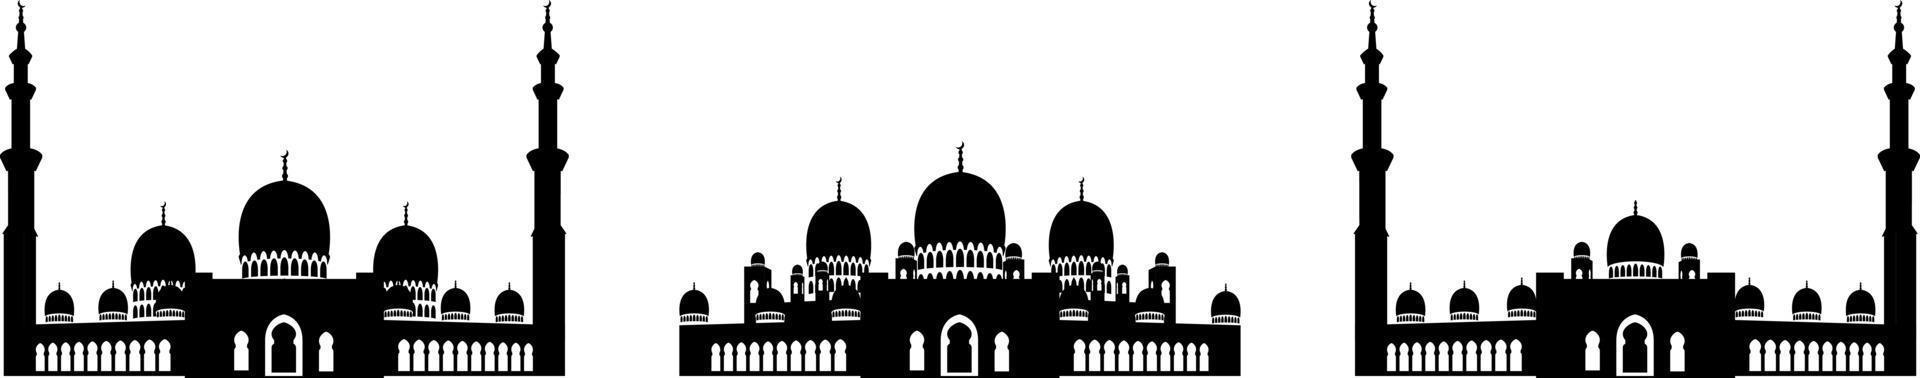 mezquita de silueta establecida por diseño vectorial vector